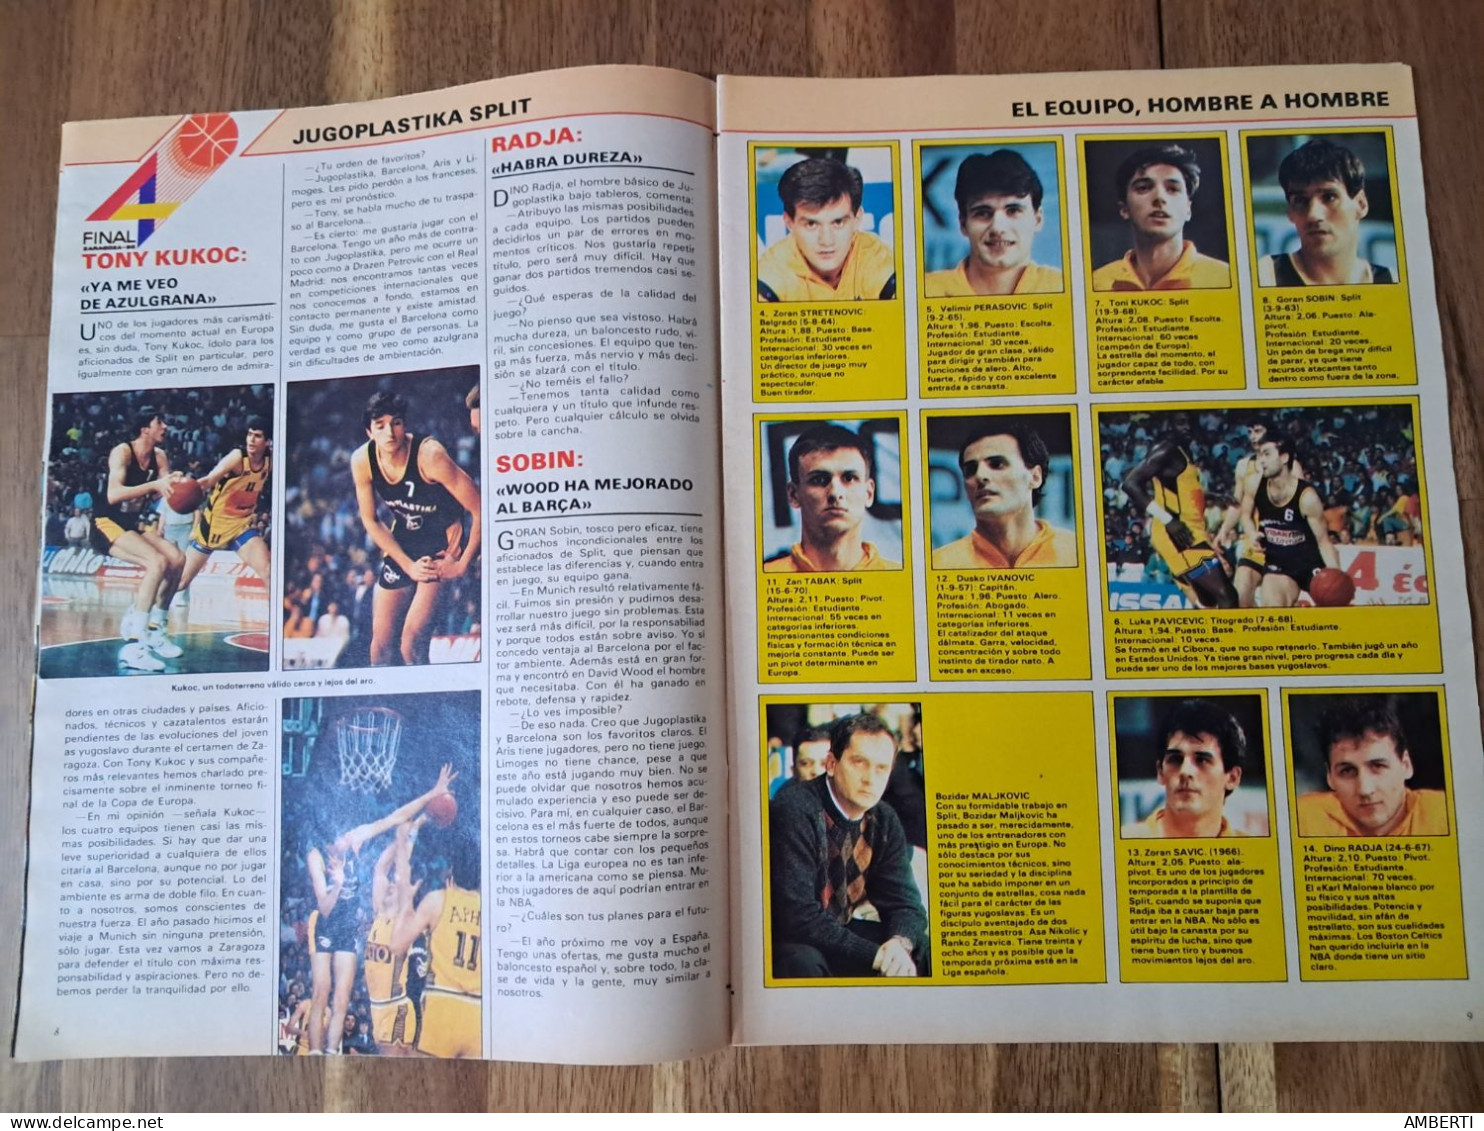 Copa Europa Baloncesto 89/90 As Color N218 1990 - Libri